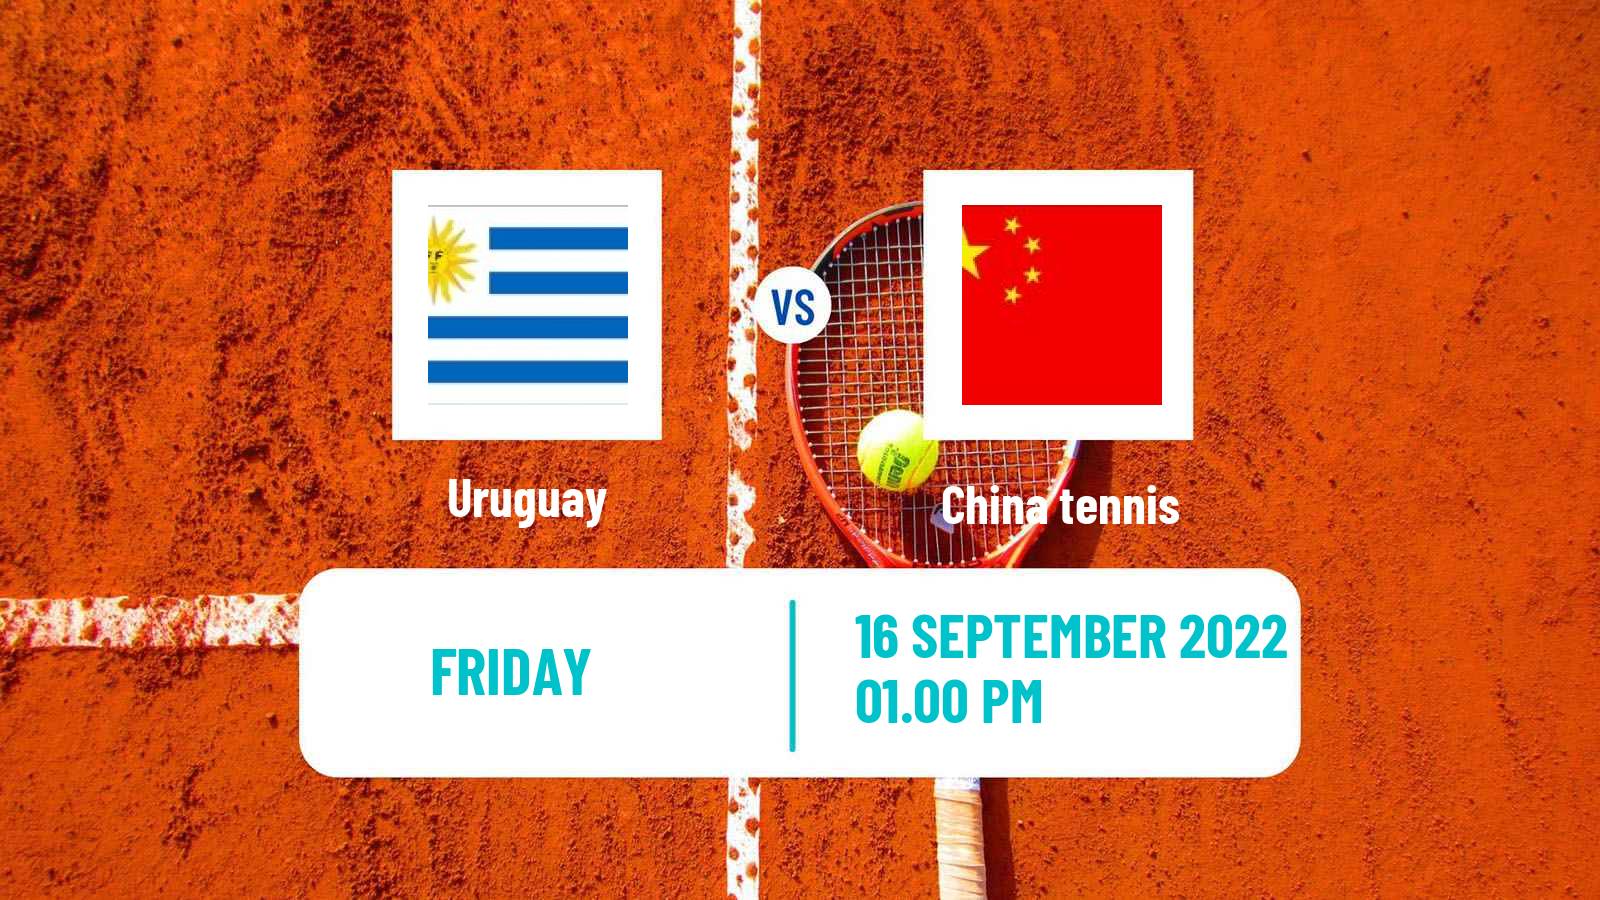 Tennis Davis Cup World Group II Teams Uruguay - China